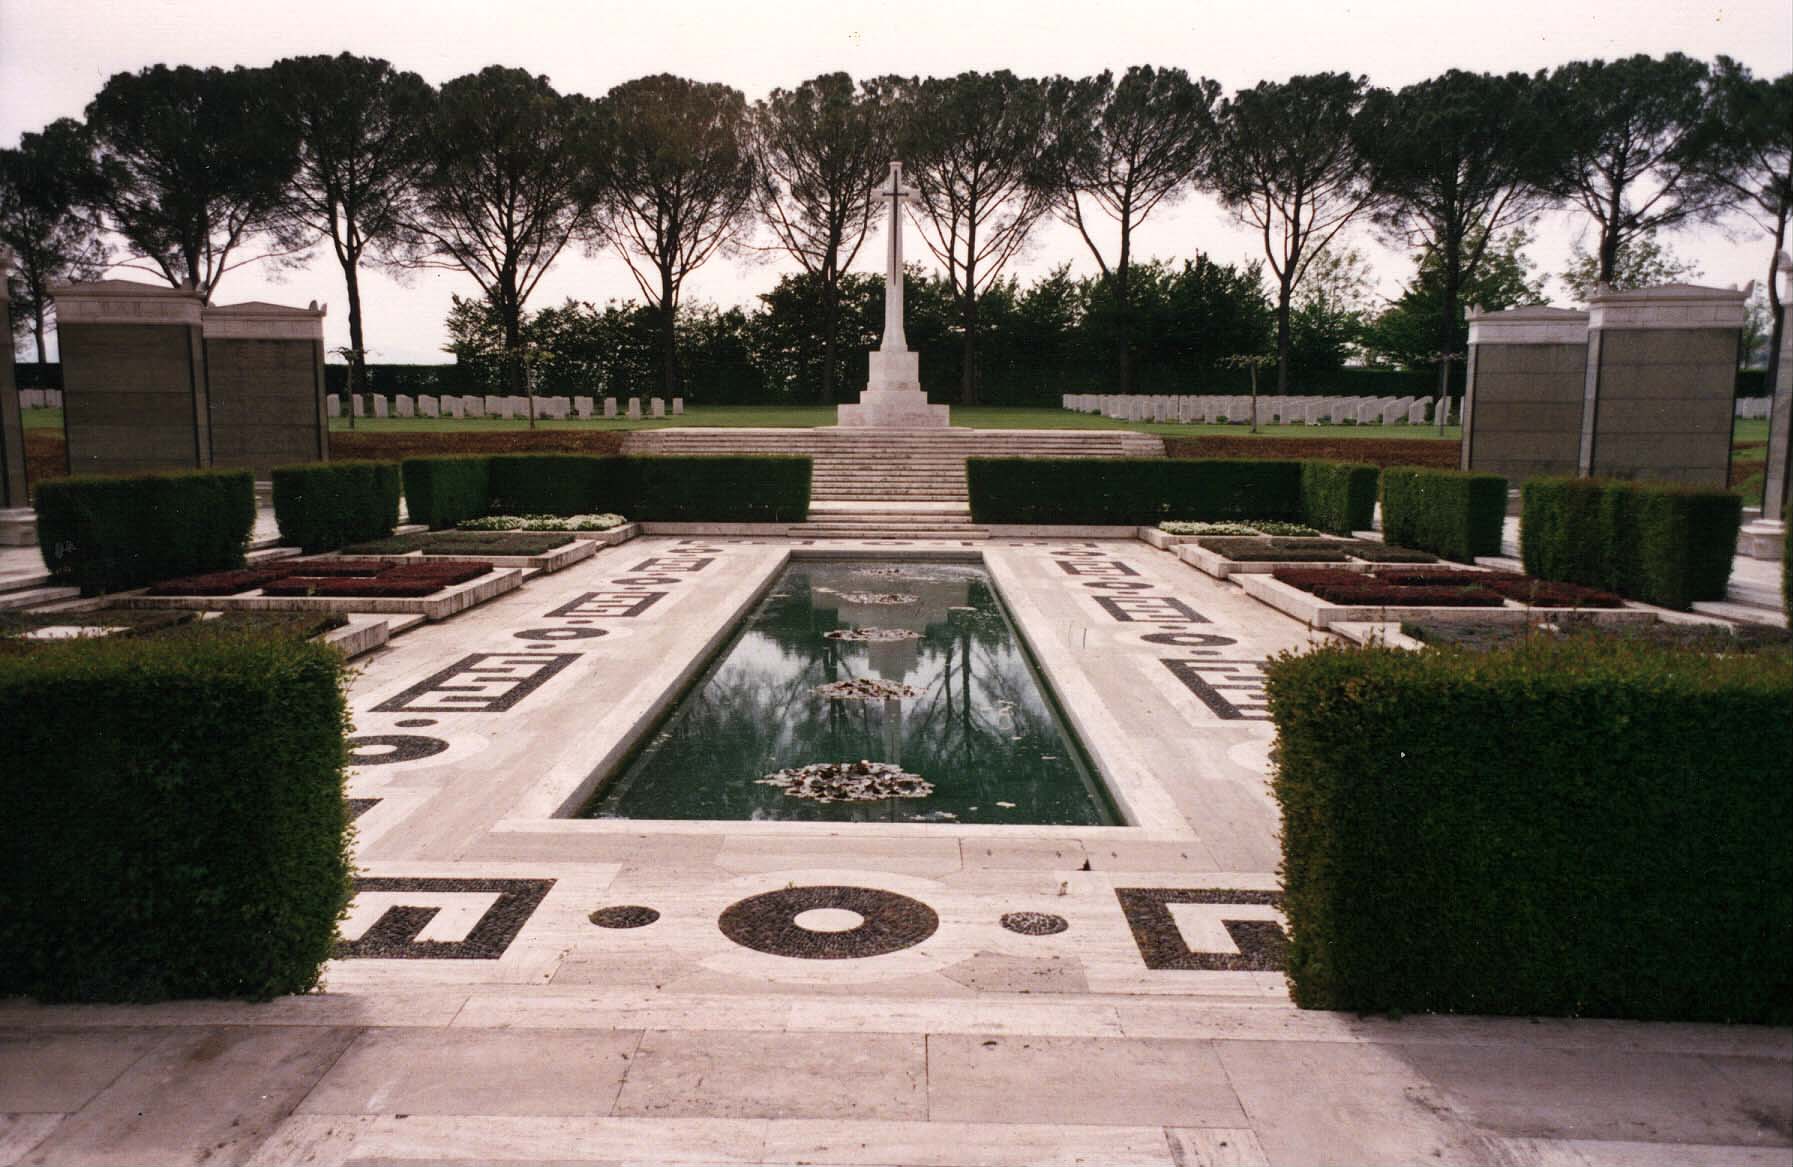 Cassino Cemetery and Memorial, Italy